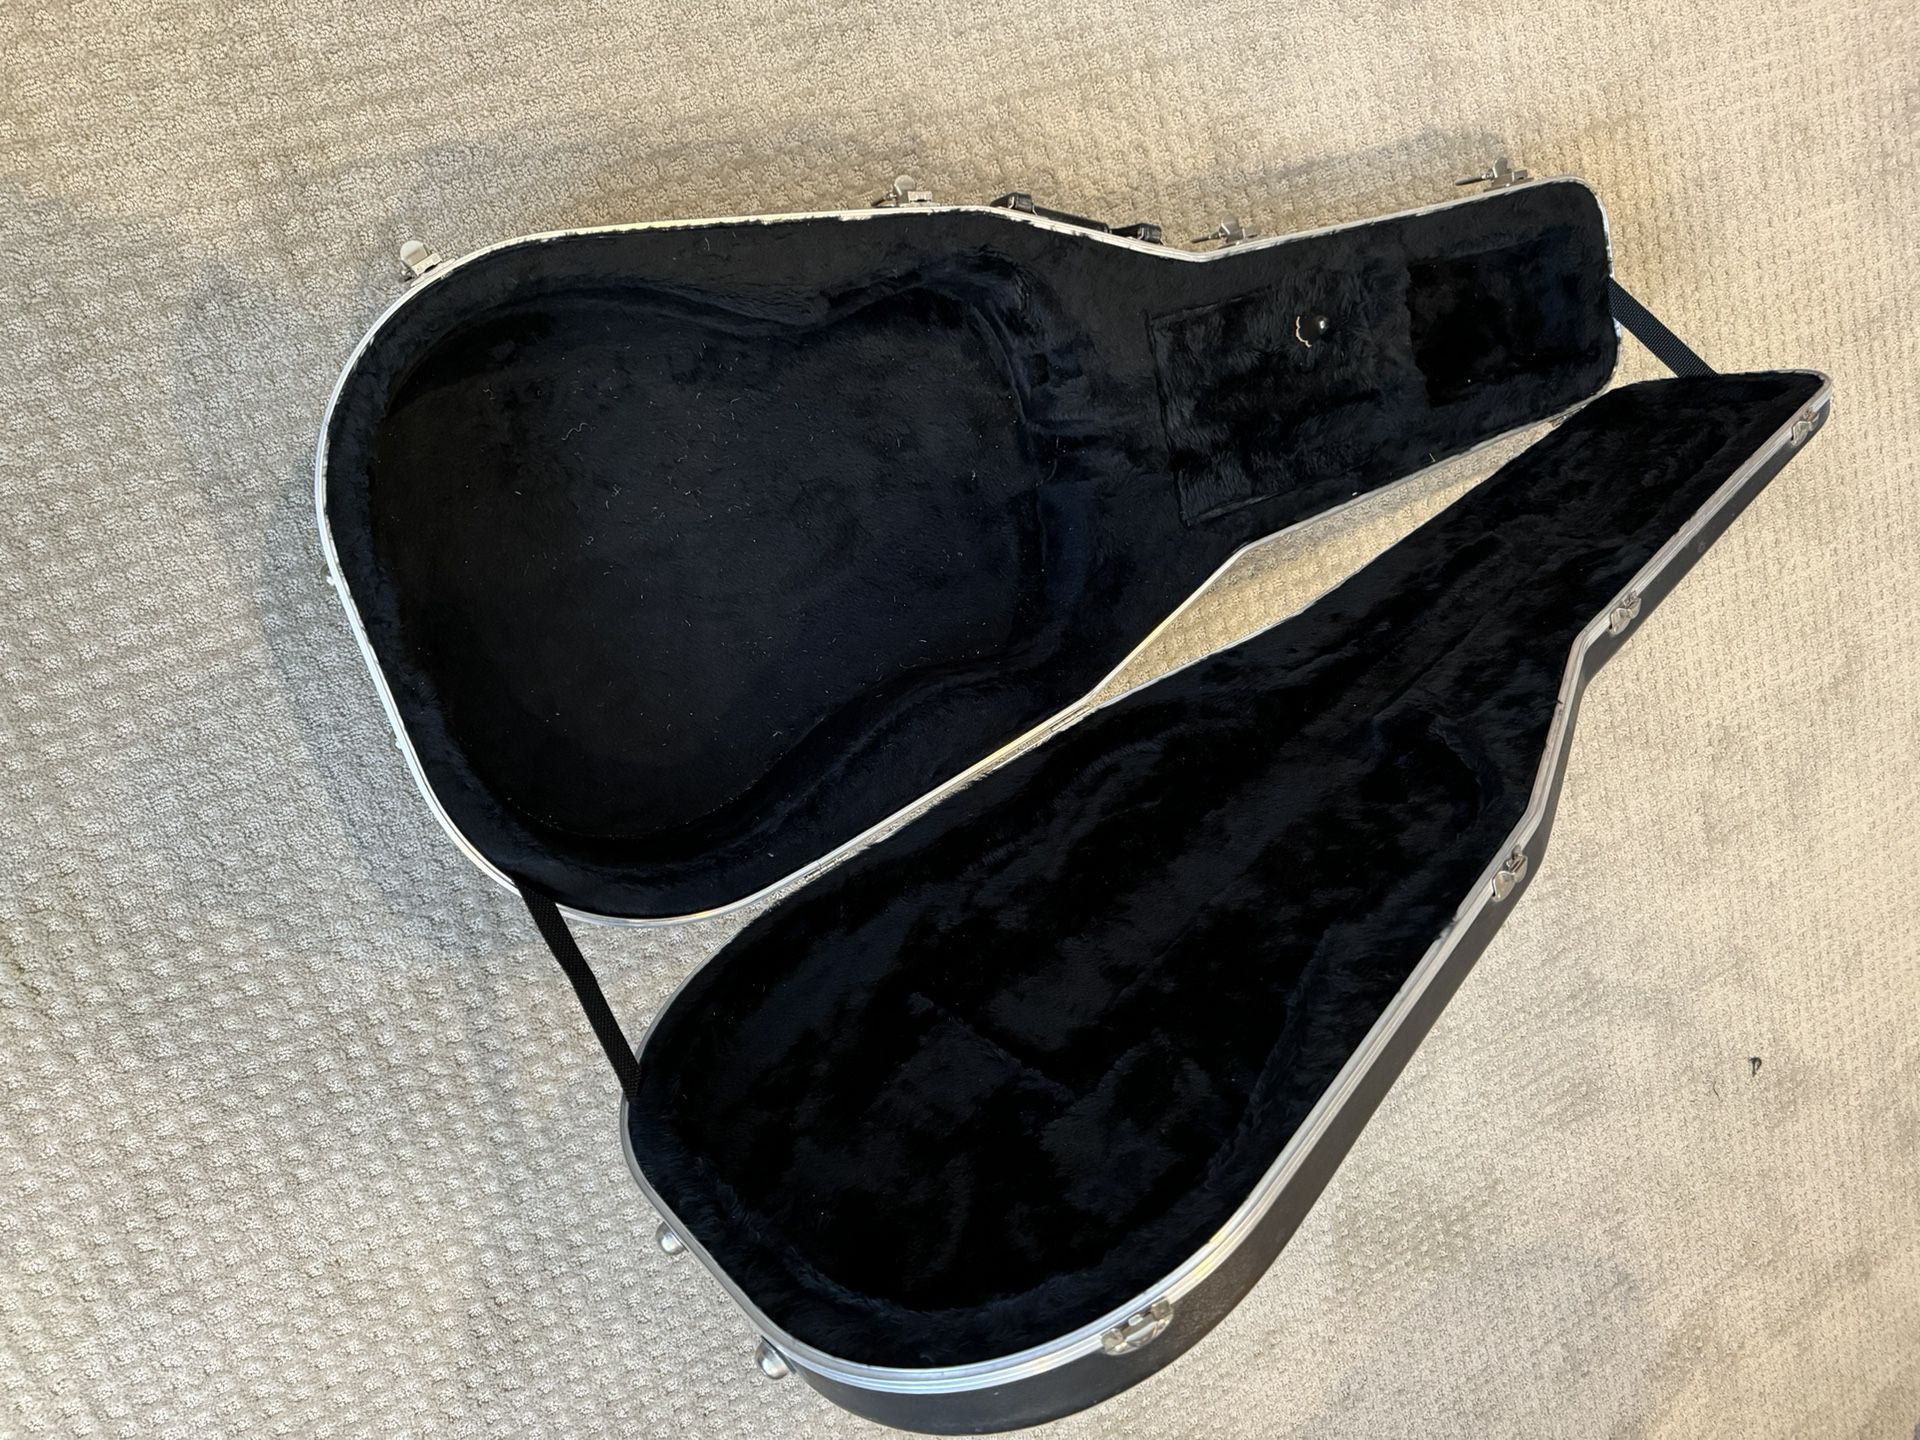 Black guitar case